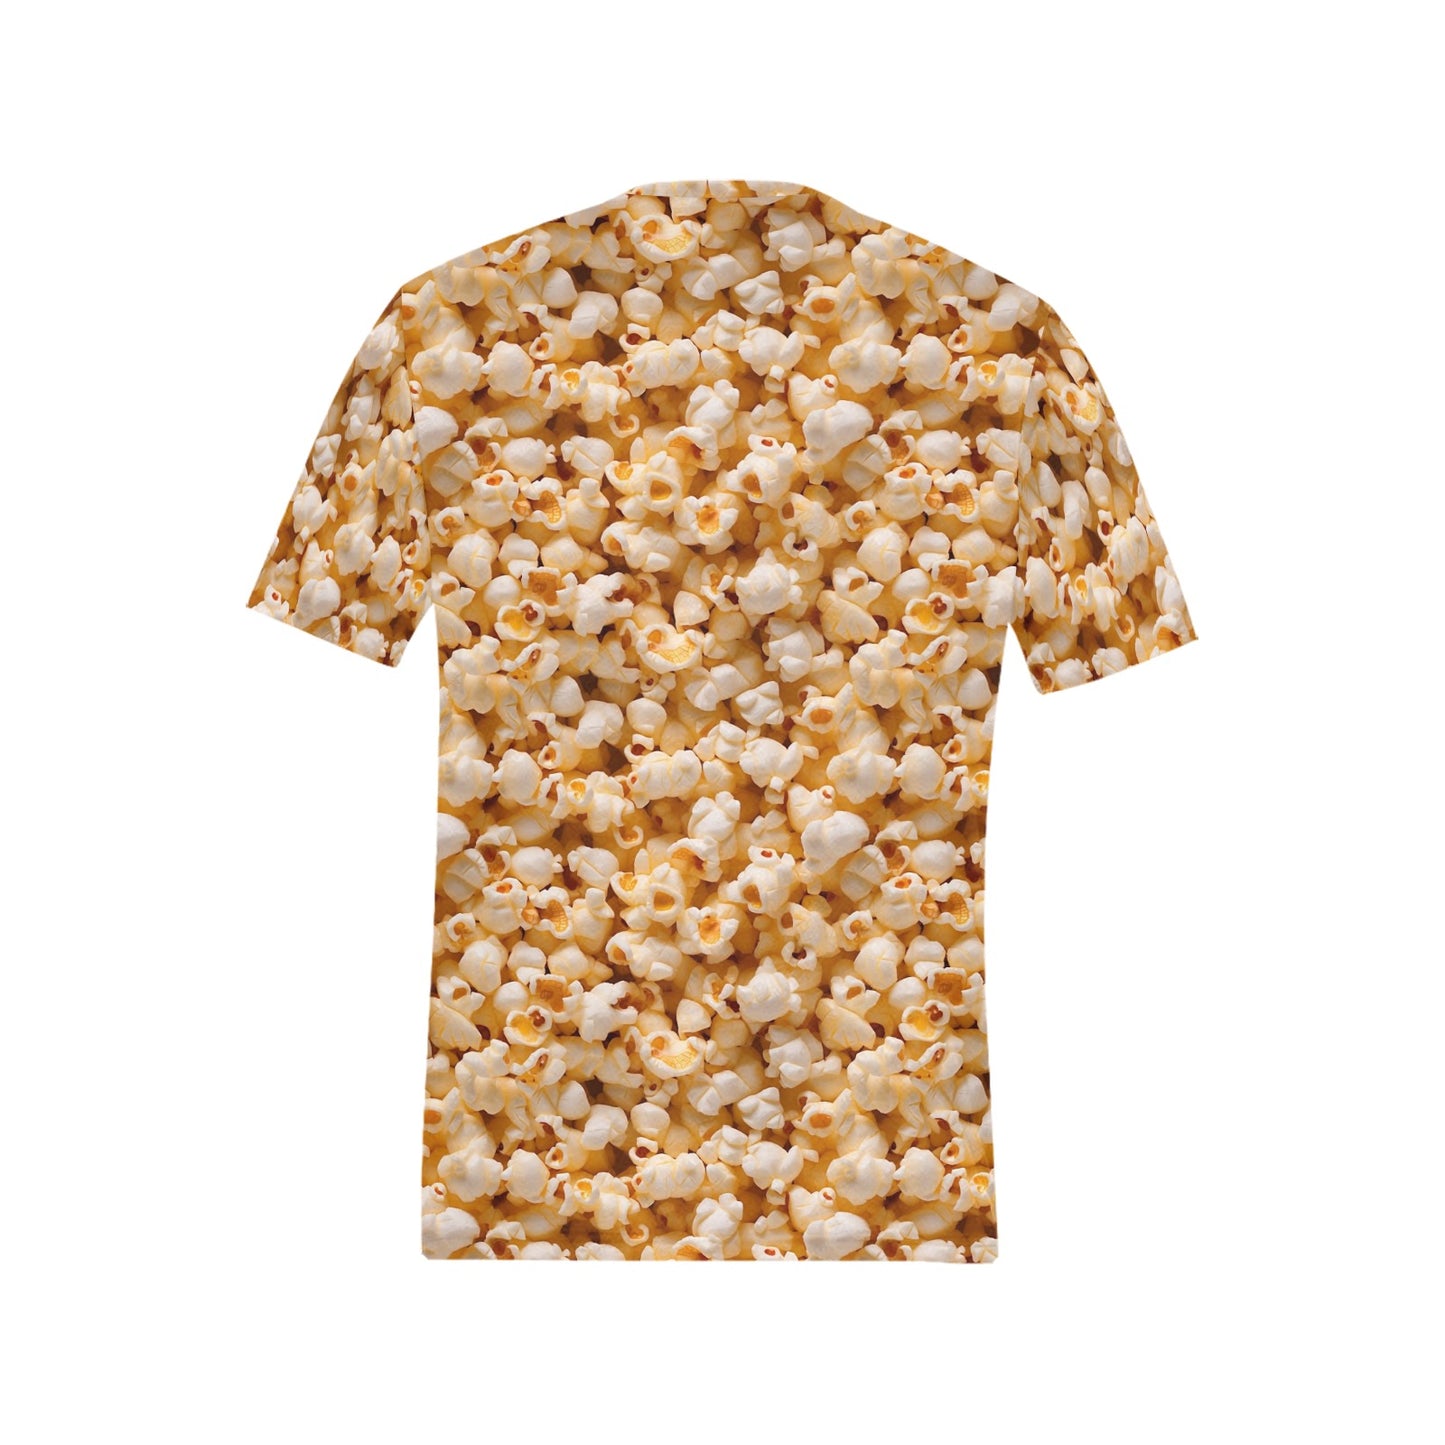 Popcorn Tshirt, Movies Halloween Costume Designer Graphic Aesthetic Lightweight Crewneck Men Women Tee Top Short Sleeve Shirt